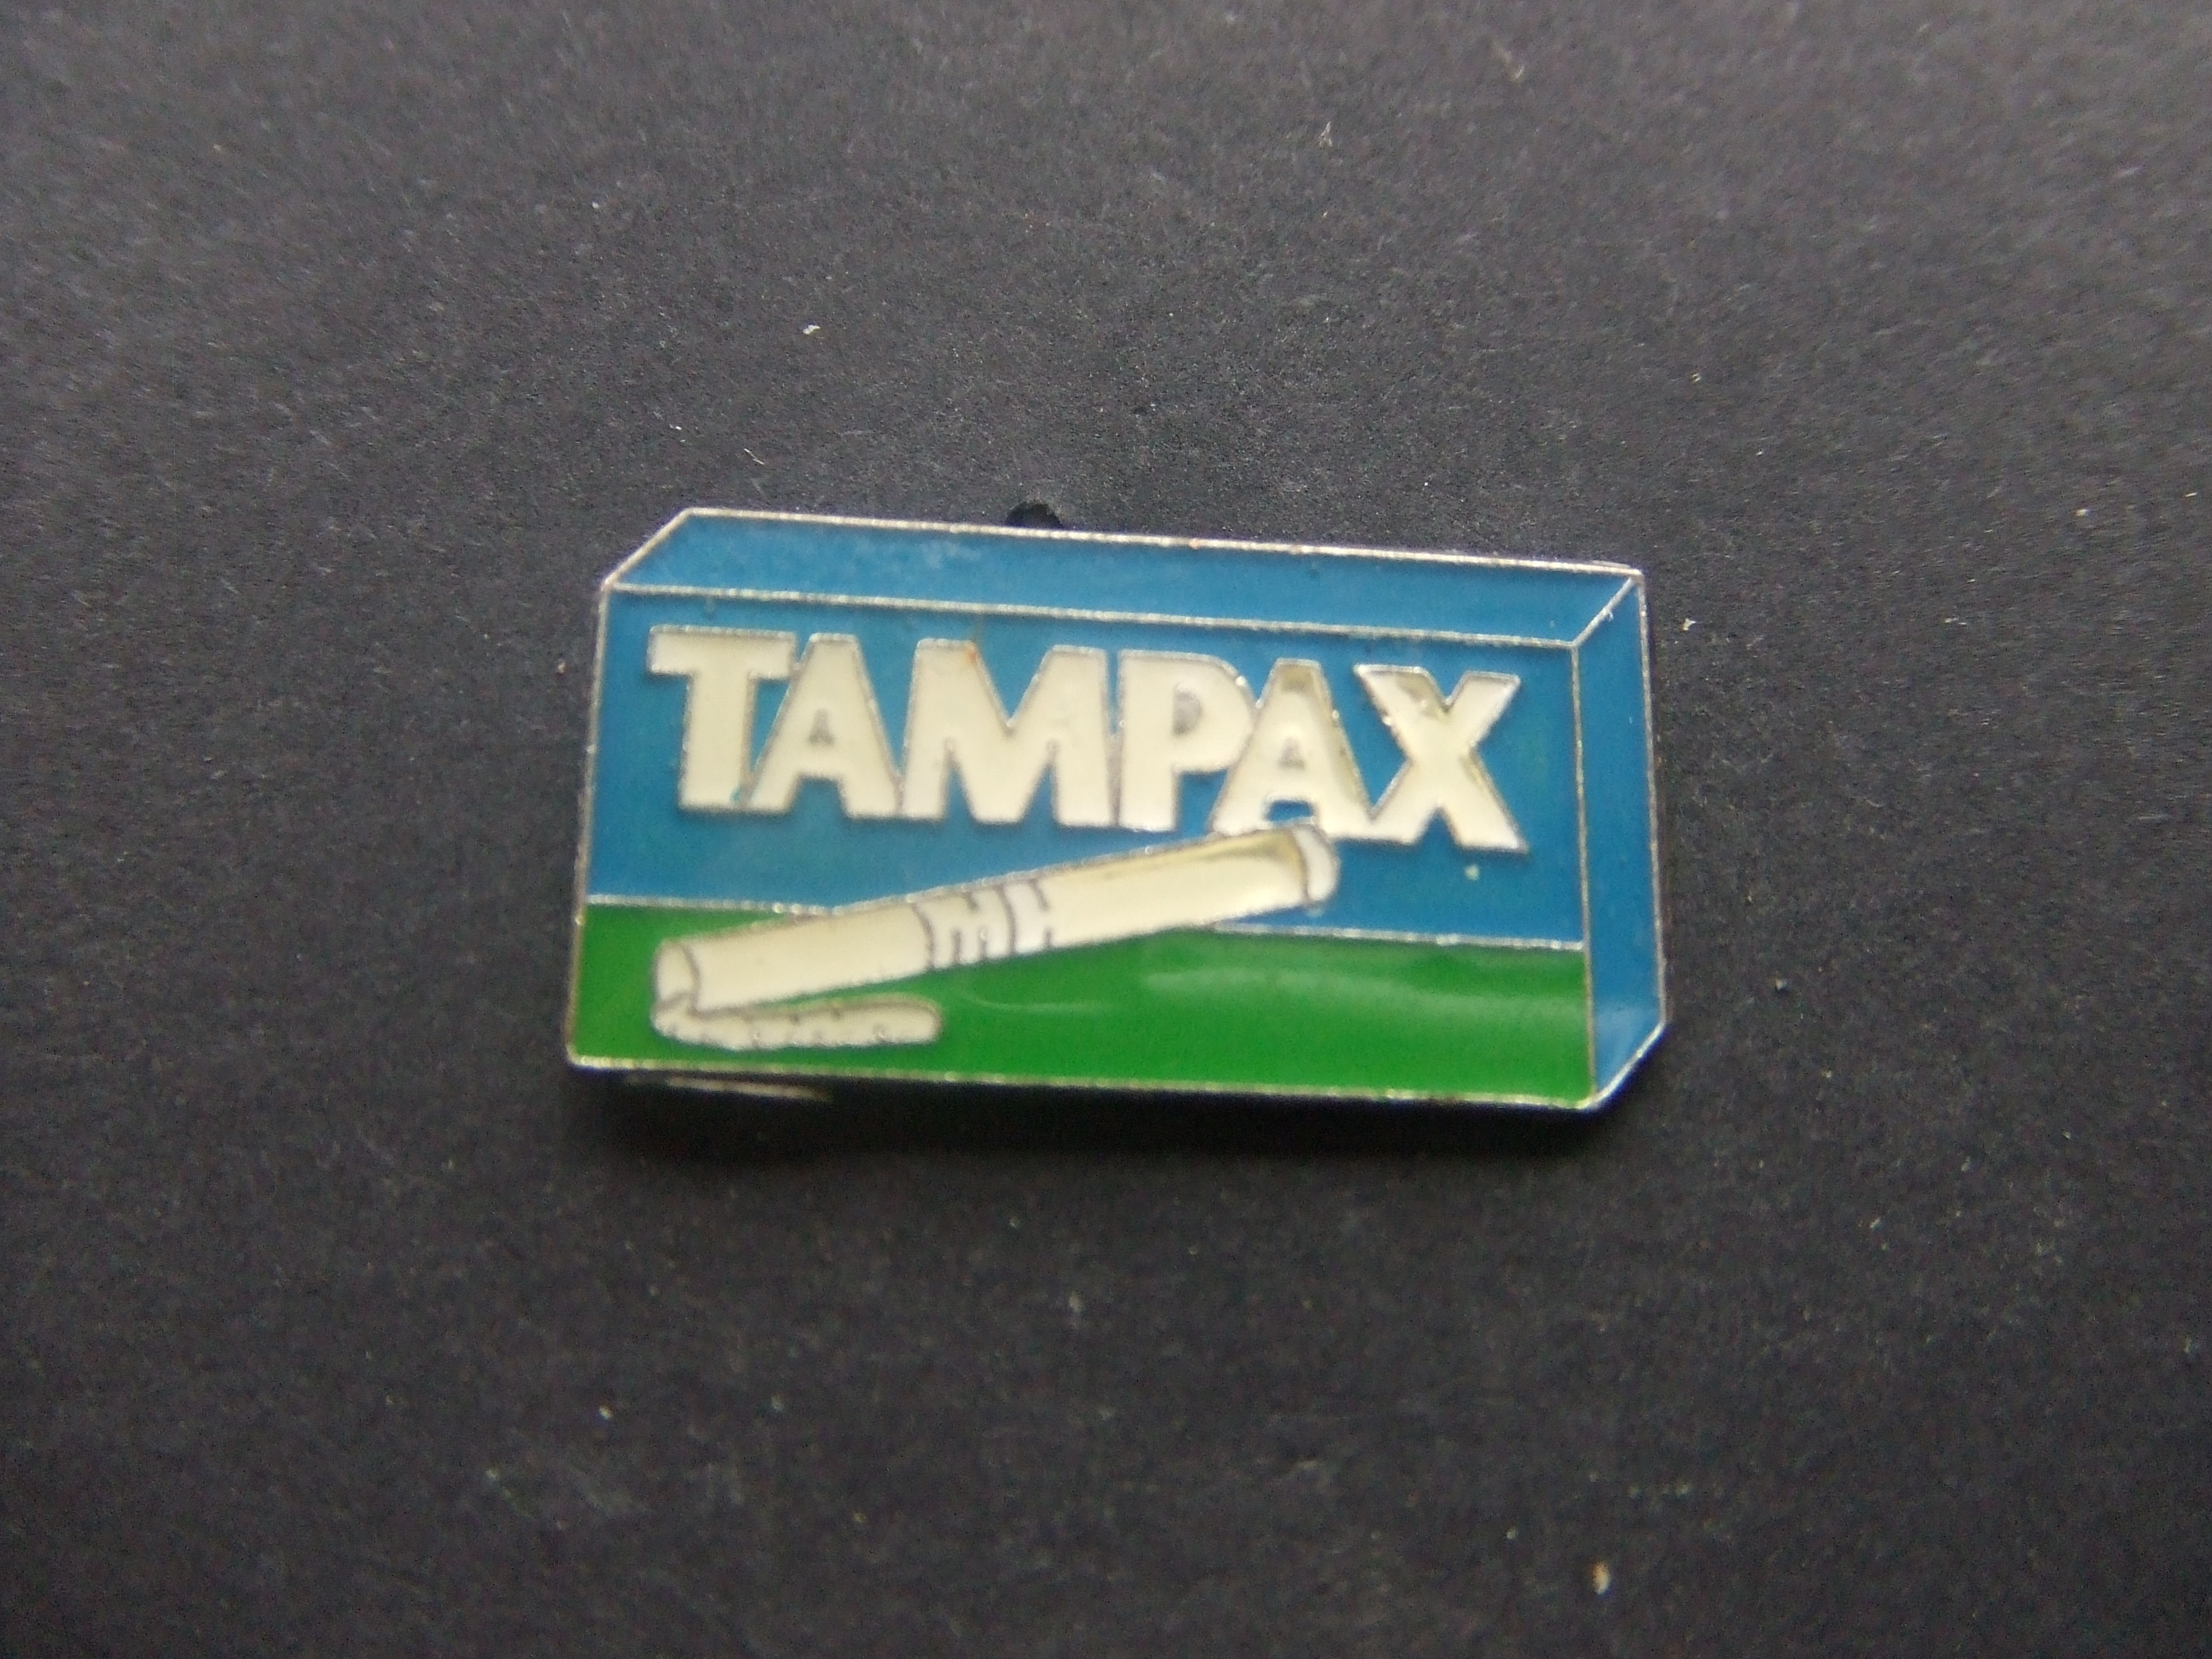 Tampax tampons Procter & Gamble